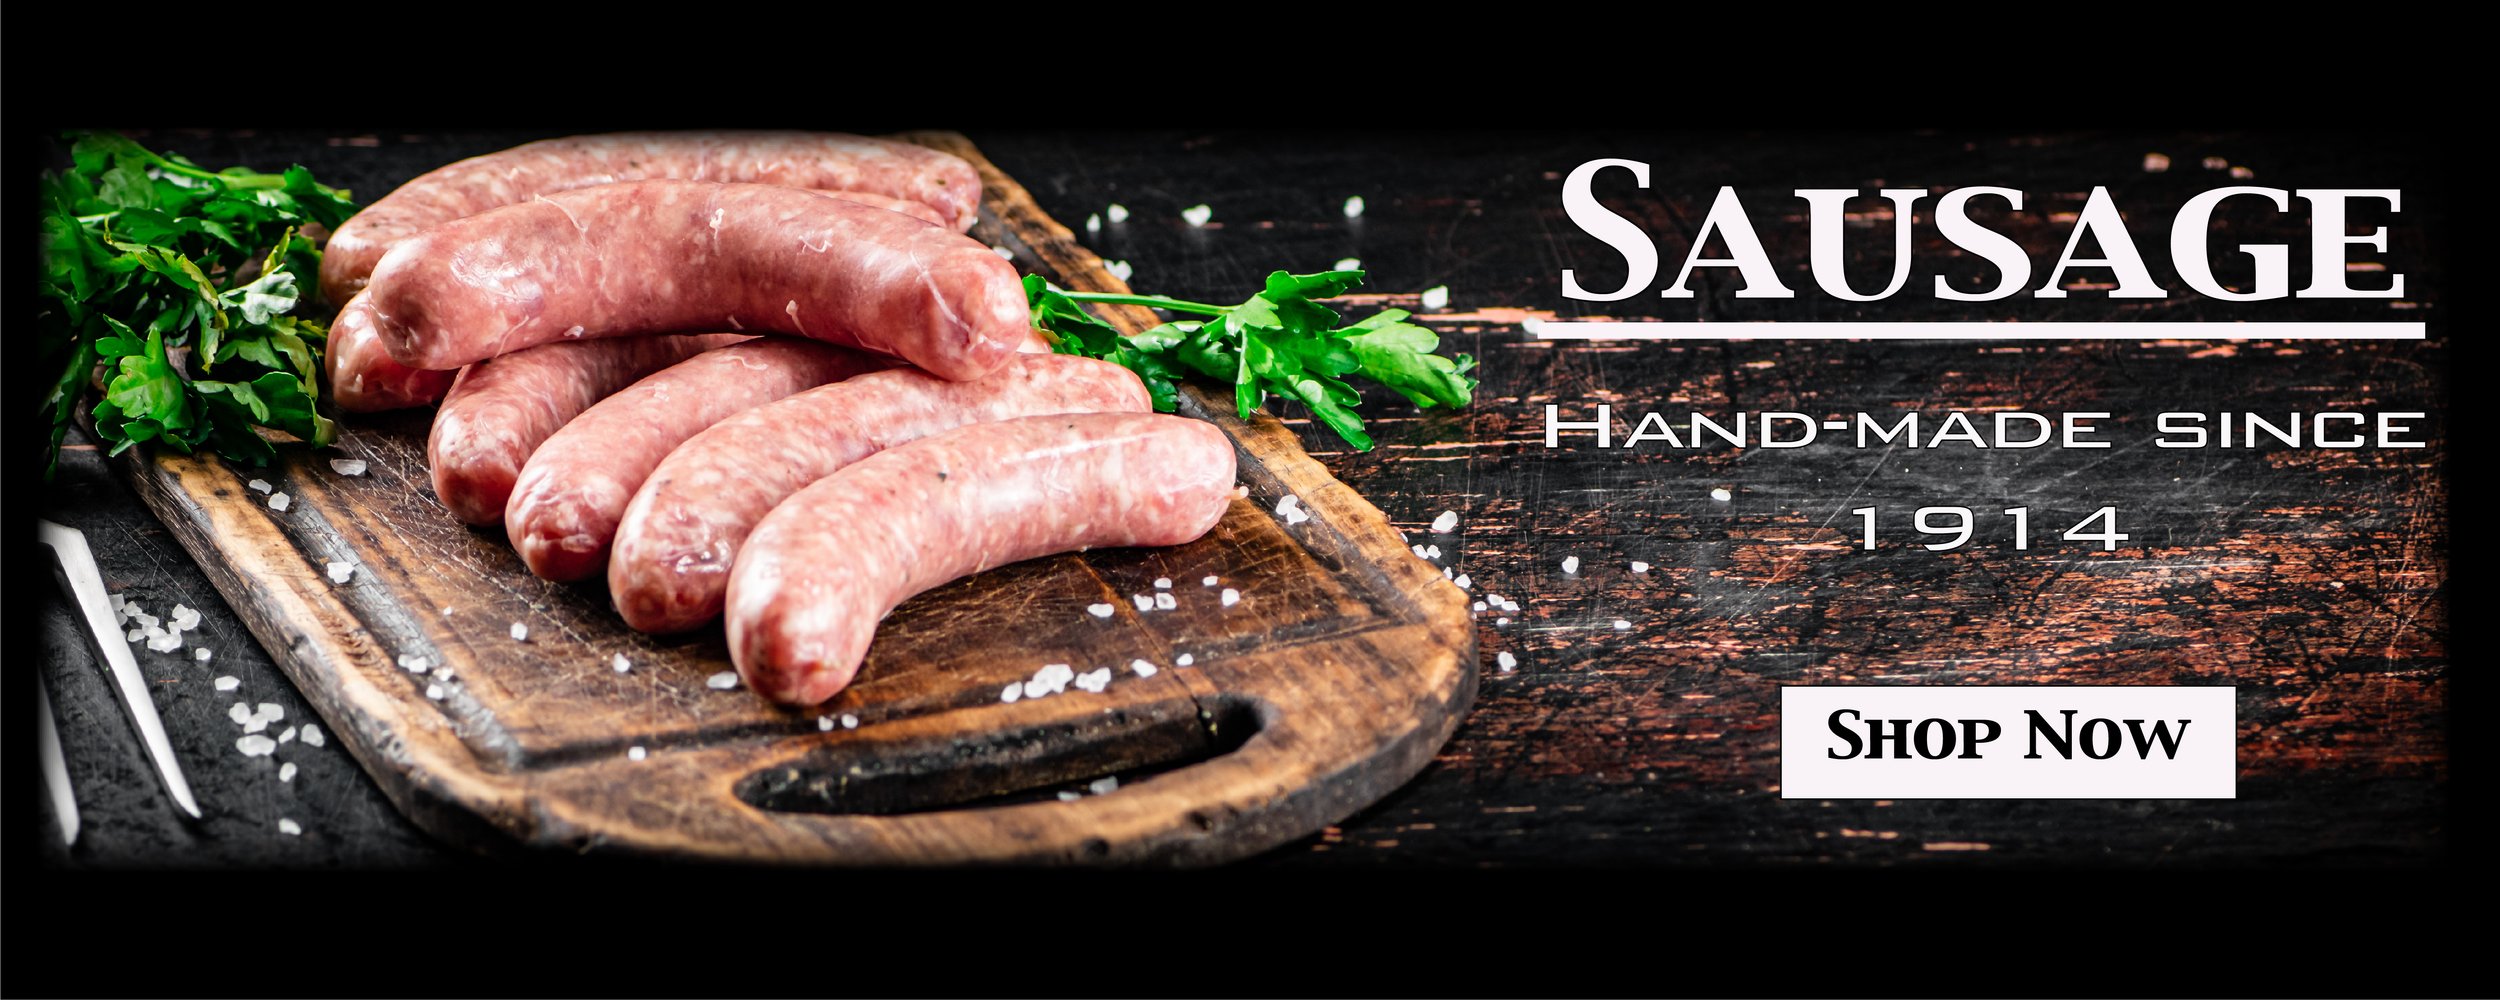 sausage banner-01.jpg